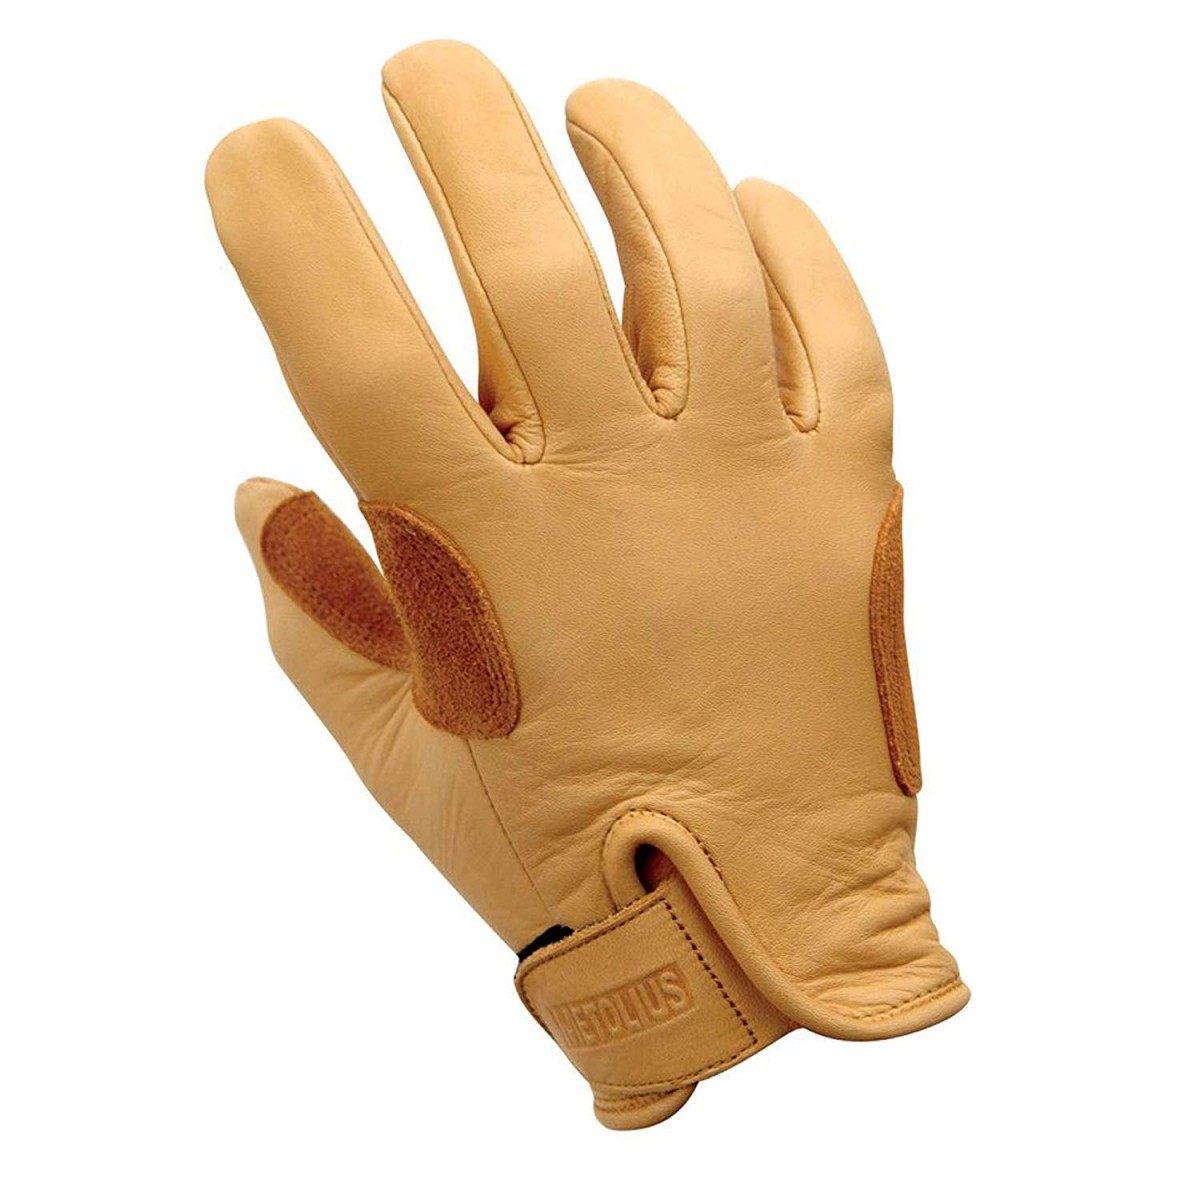 Metolius Belay Glove Review (Metolius Belay Glove)